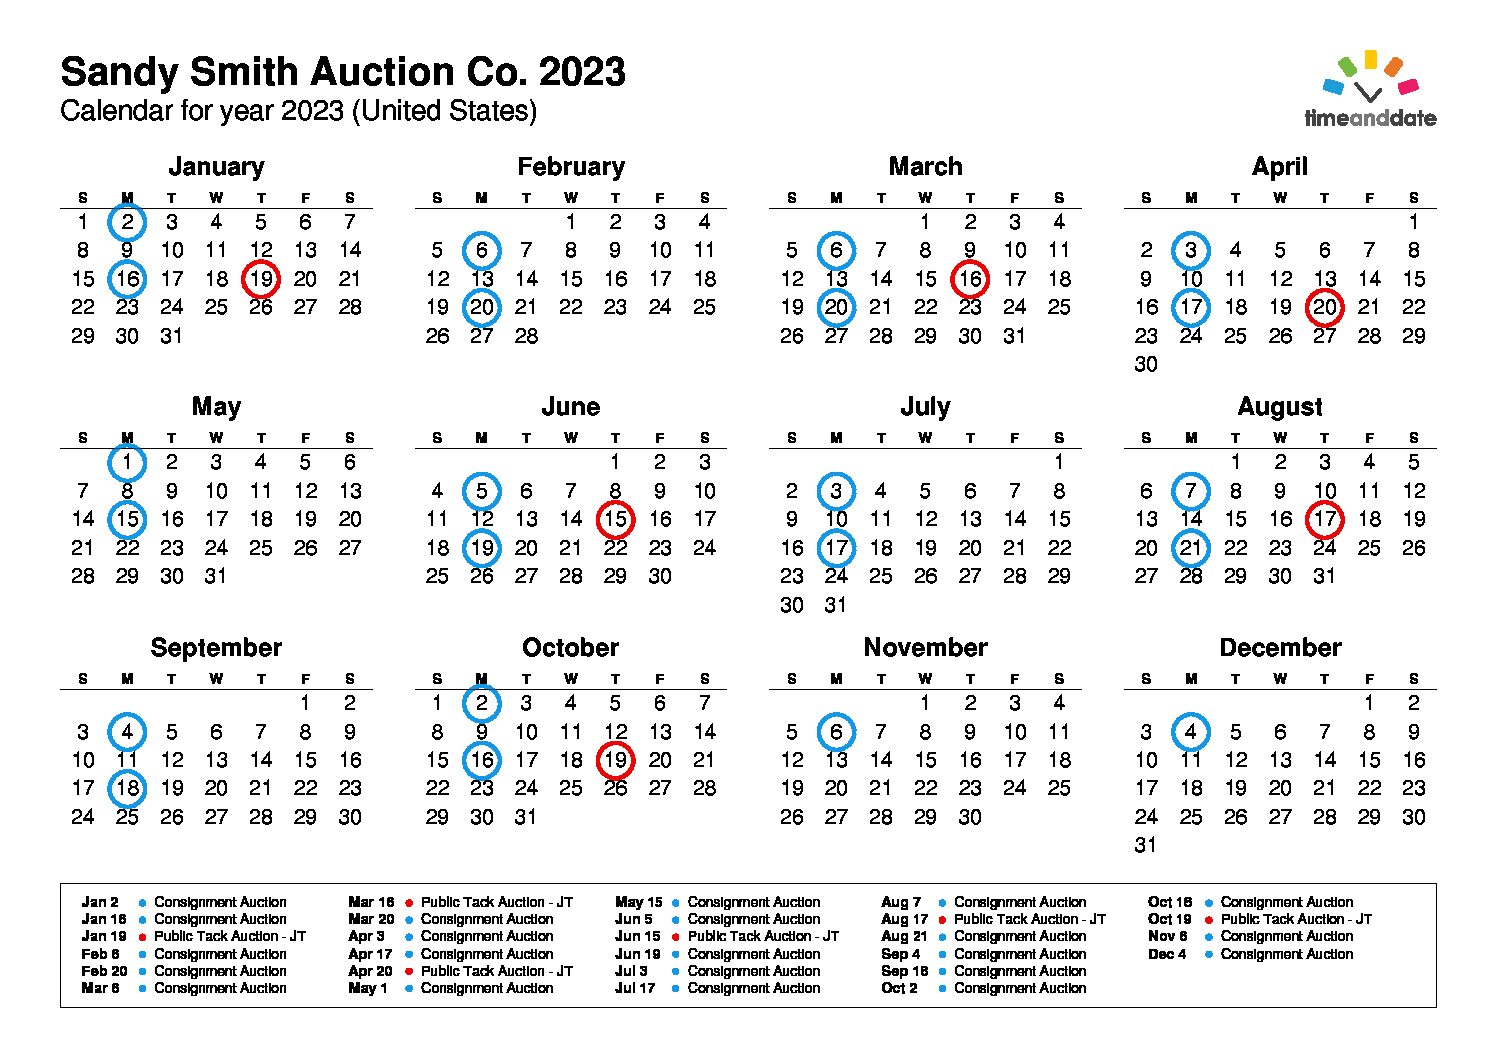 Click for 2023 Consignment Auction Calendar